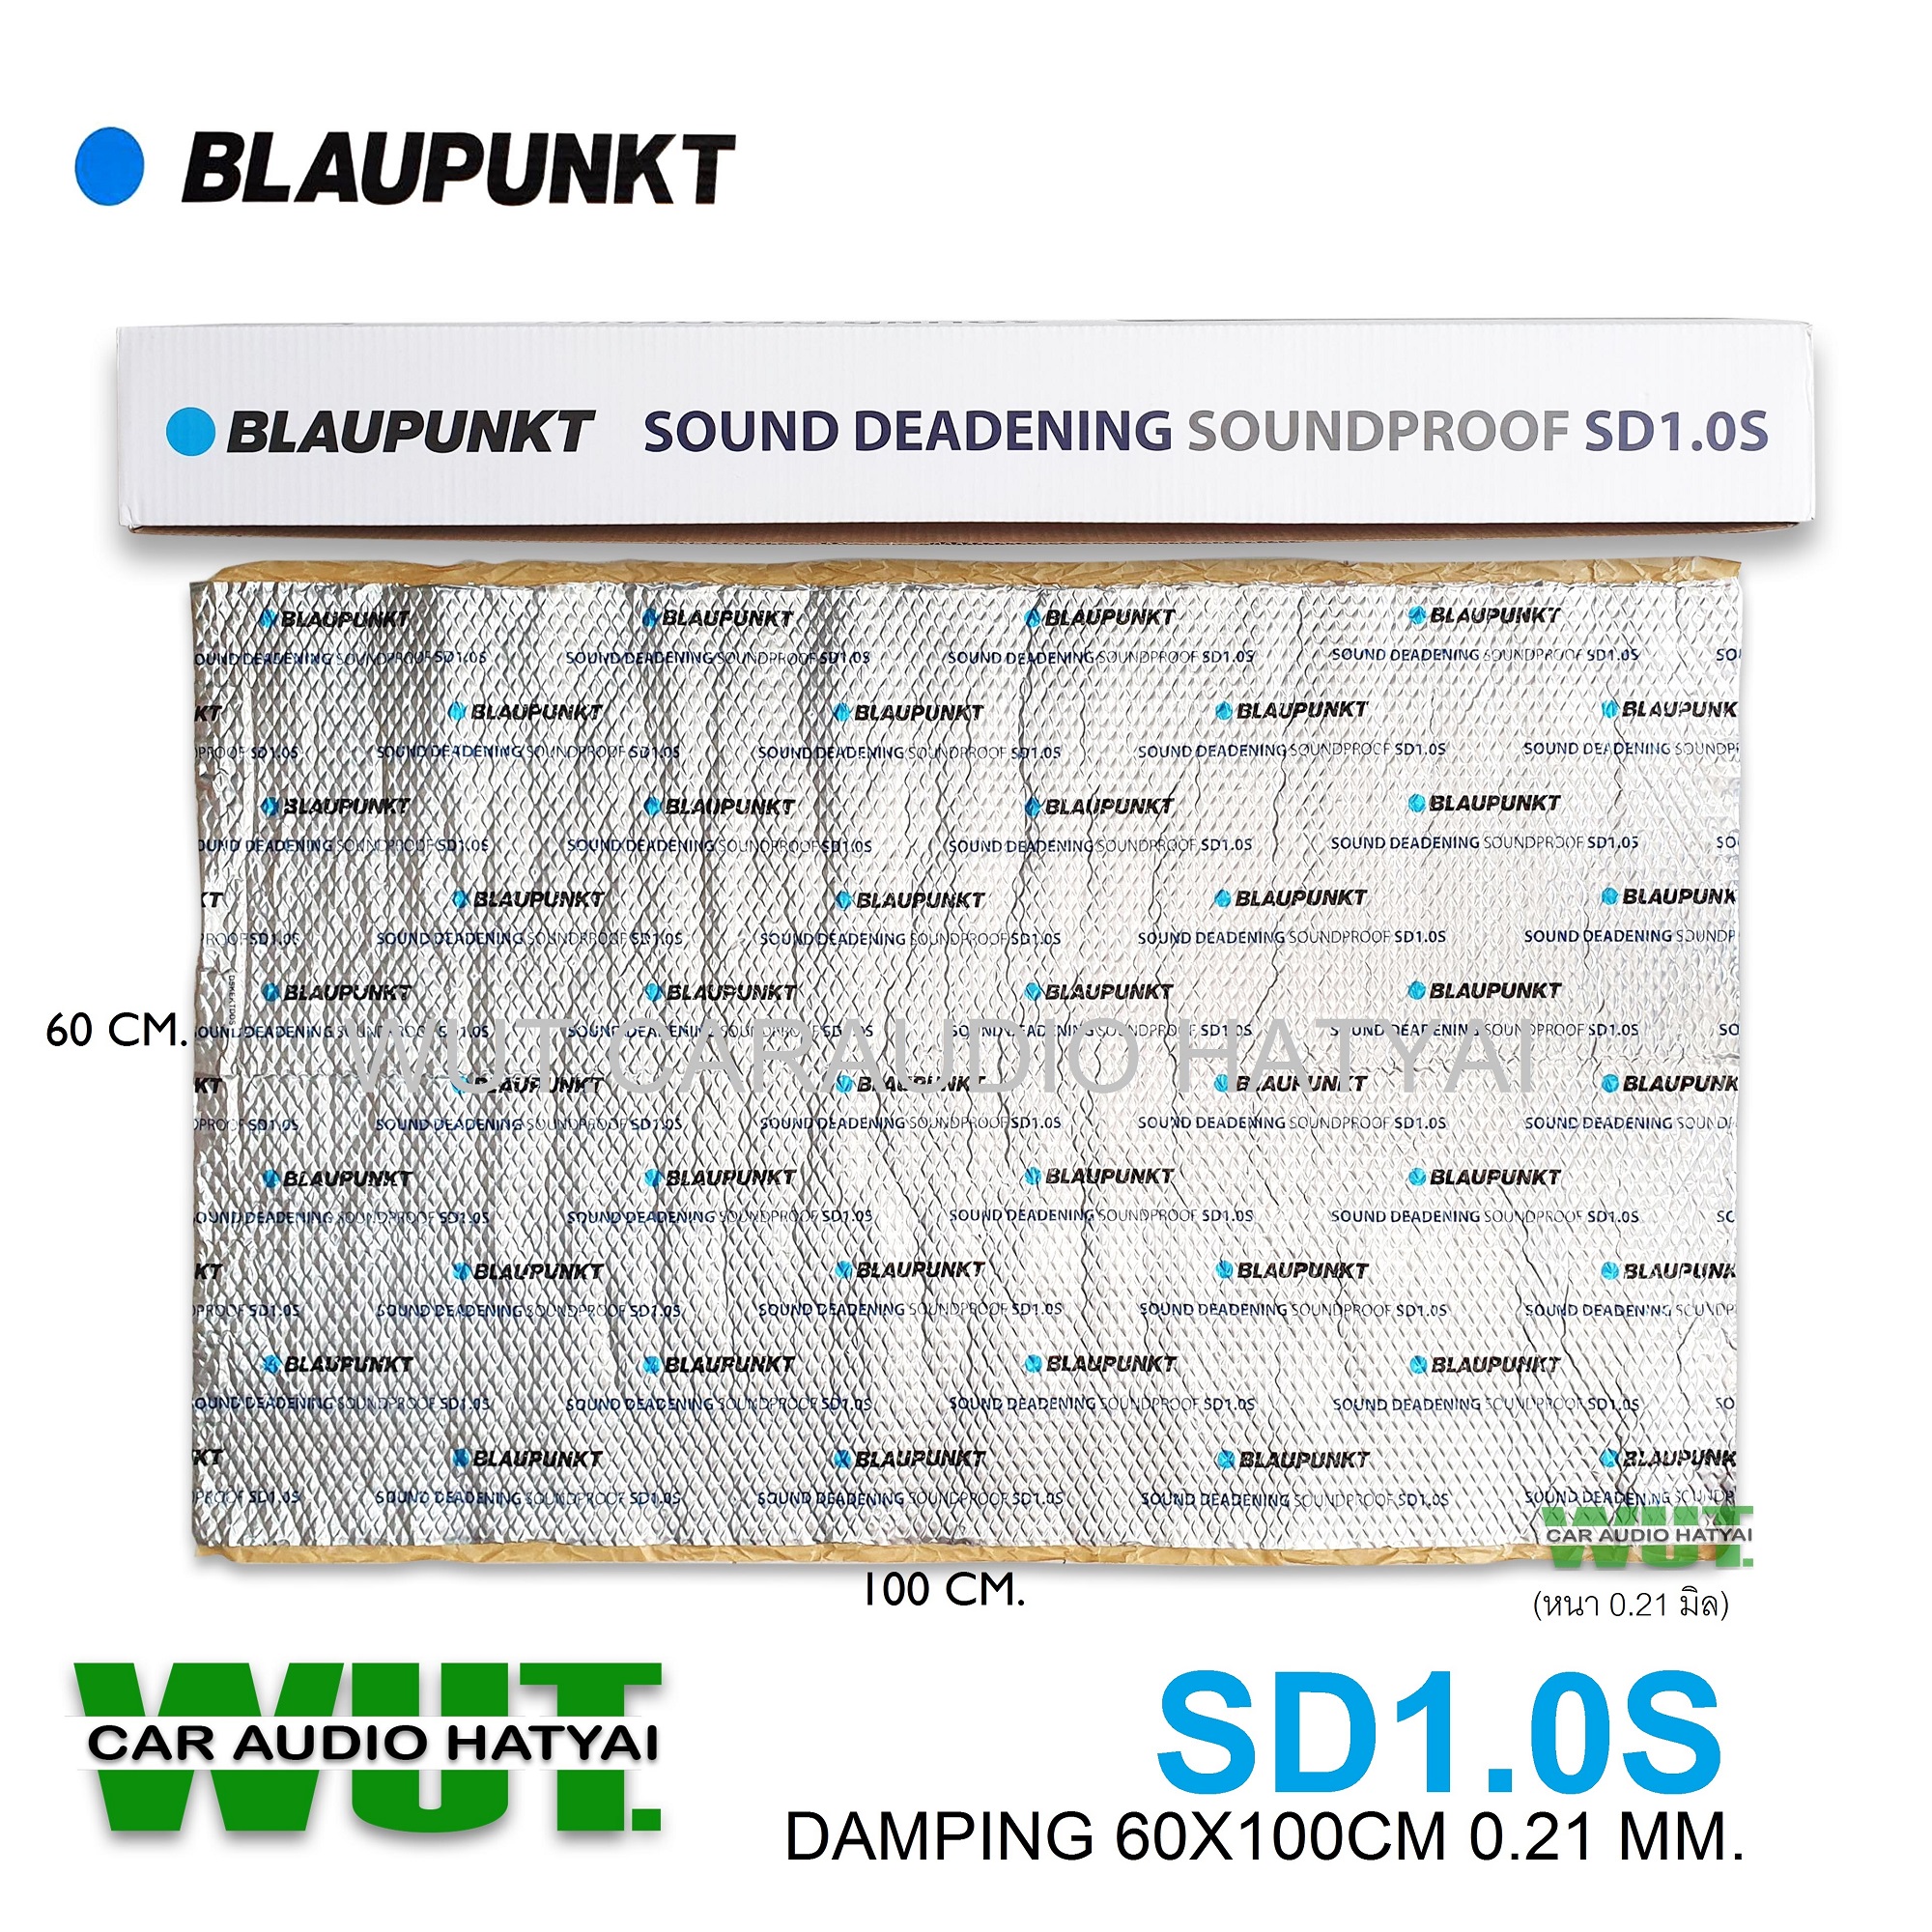 BLAUPUNKT Sound Damping Premium แผ่นแดมป์ แบบฟอยล์ คุณภาพสูงเกรดพรีเมี่ยม ติดช่วยลดการสั่น เก็บเสียง (ขนาด 100cm.x60cm) BLAUPUNKT รุ่น SD1.0S =1แผ่น.